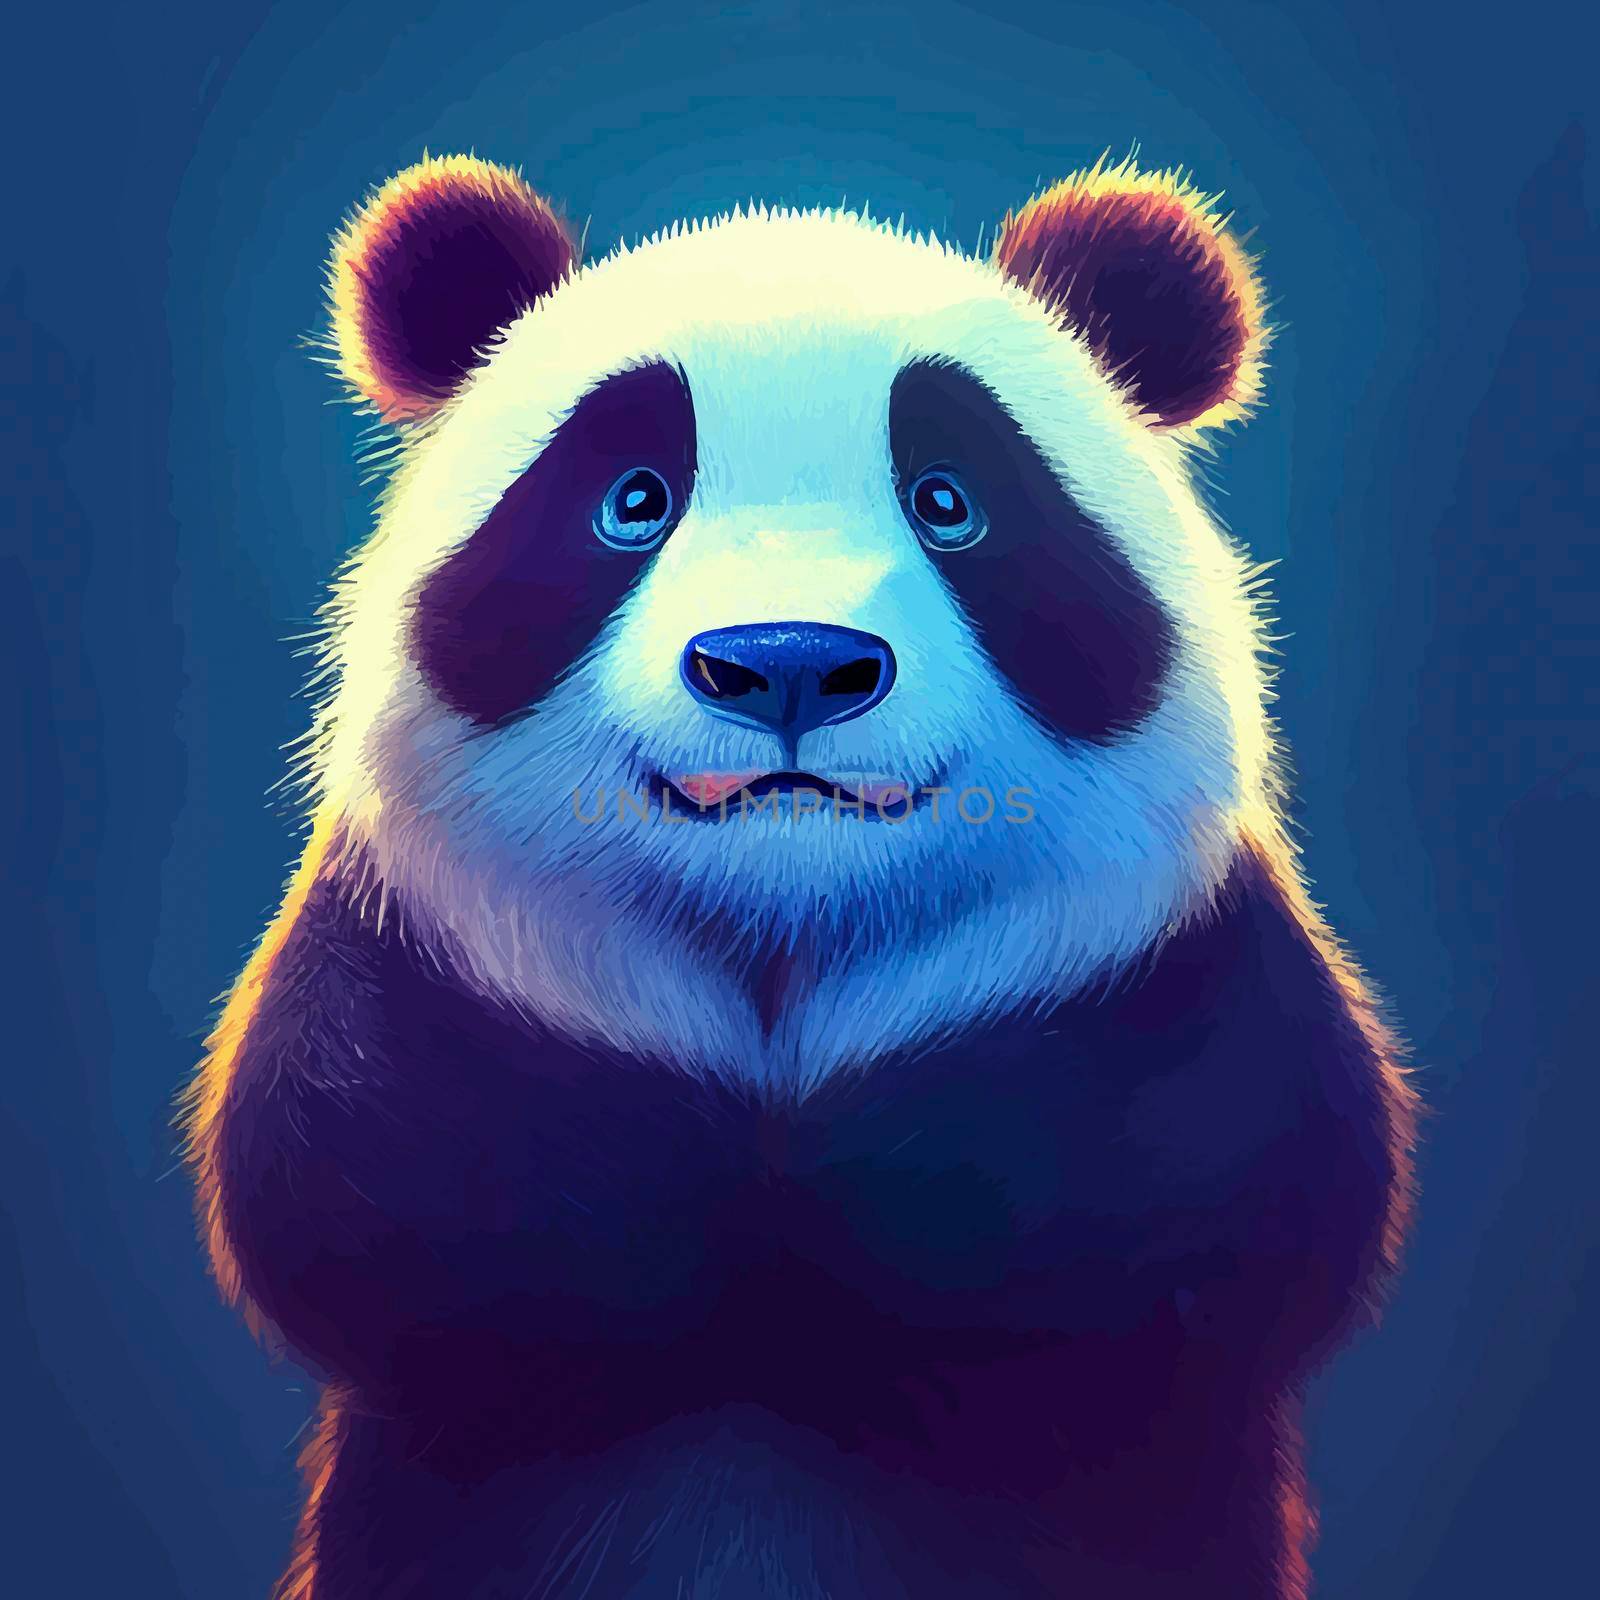 animated illustration of a cute panda, animated baby panda portrait by JpRamos